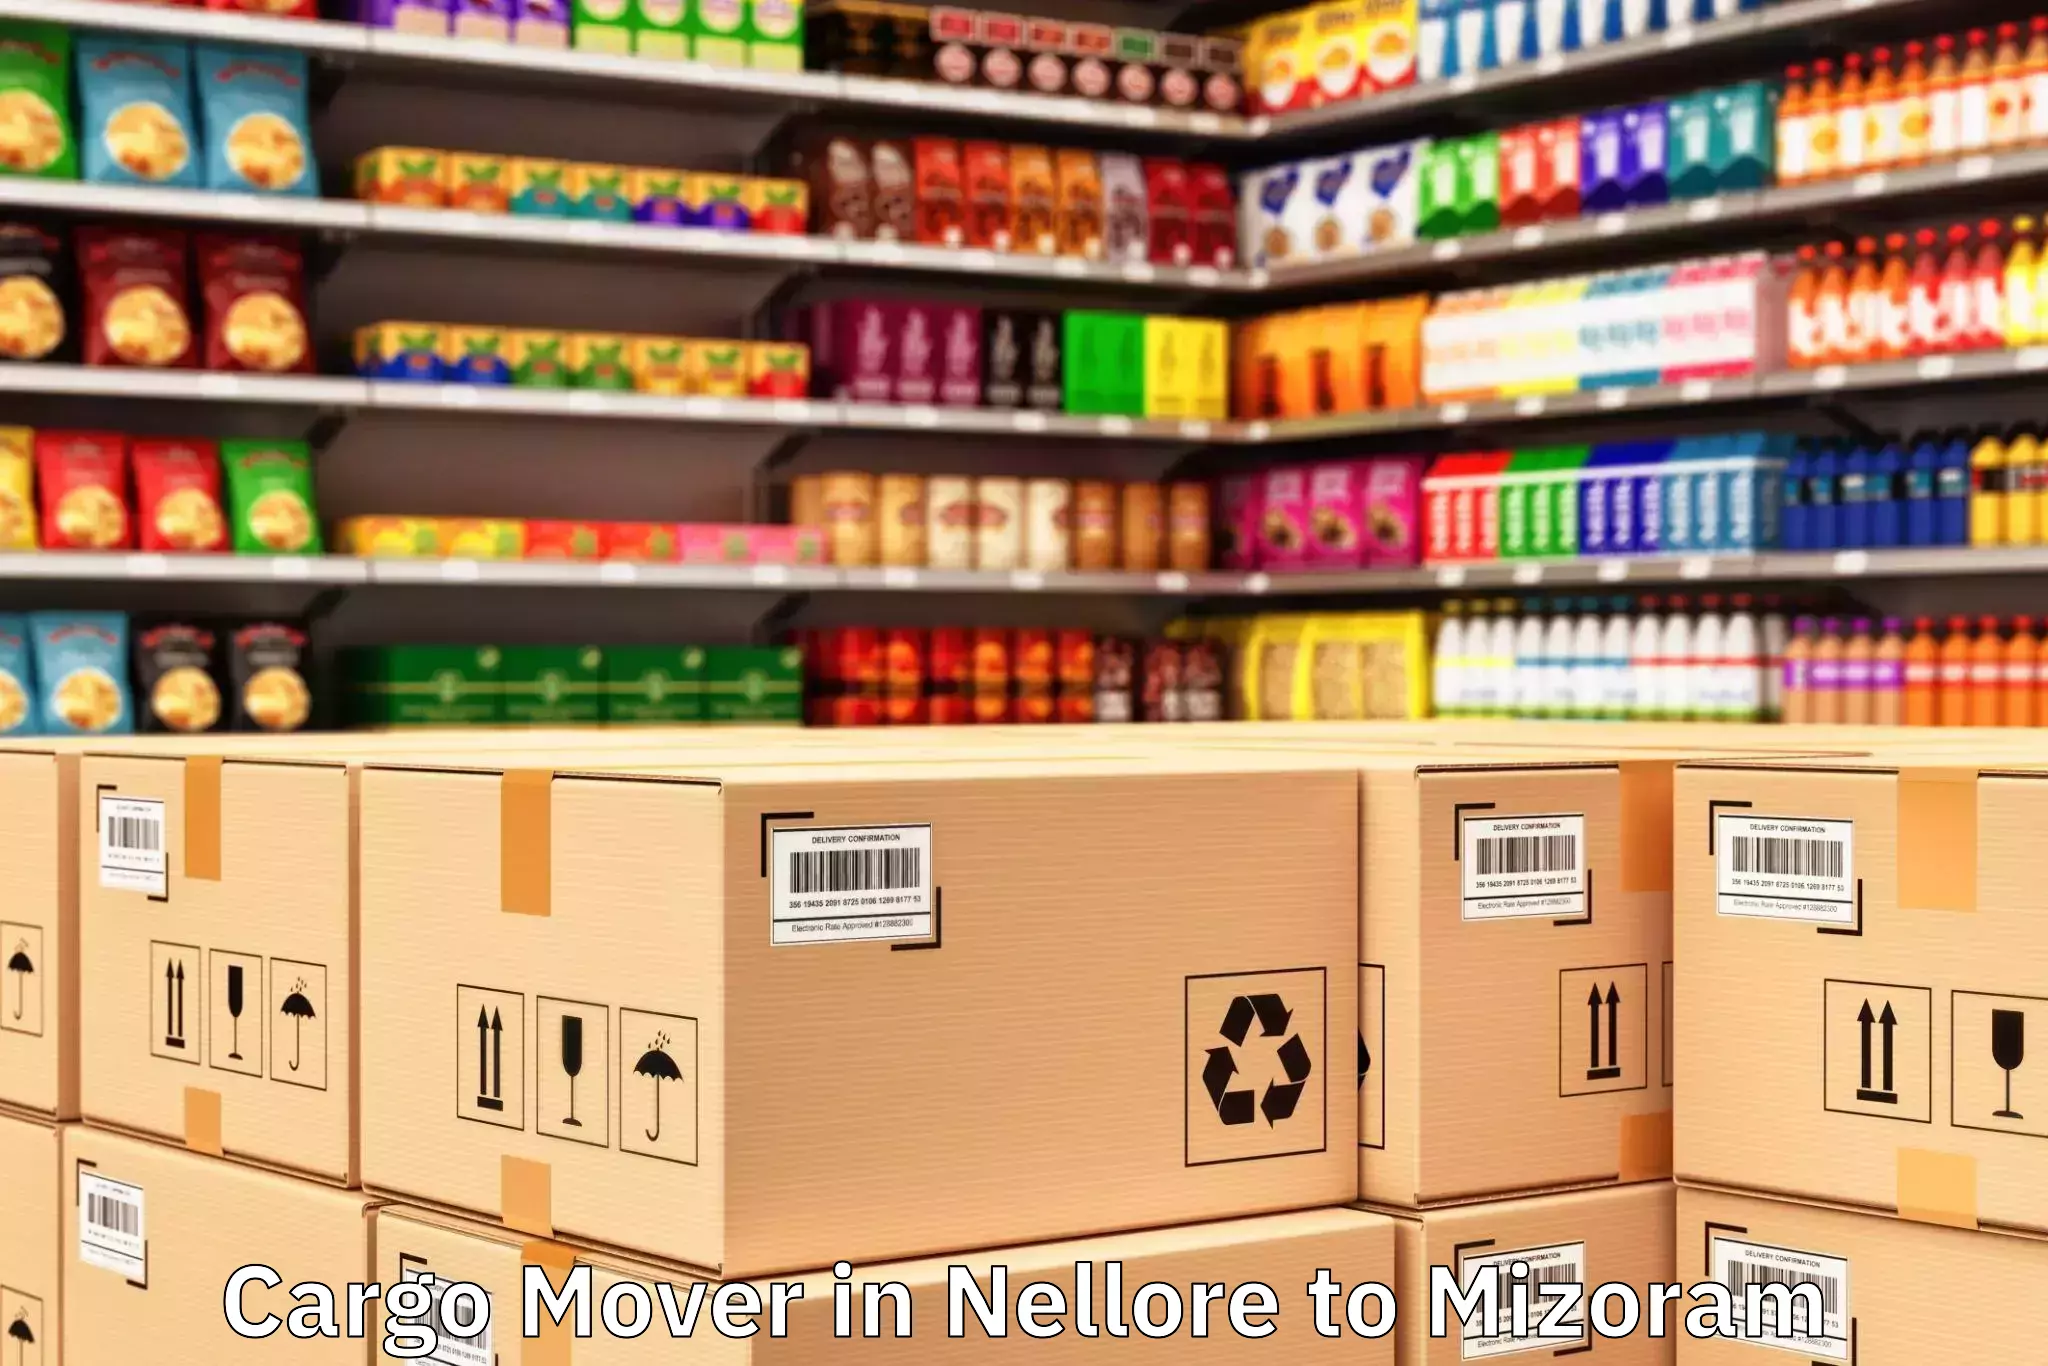 Professional Nellore to Mizoram Cargo Mover